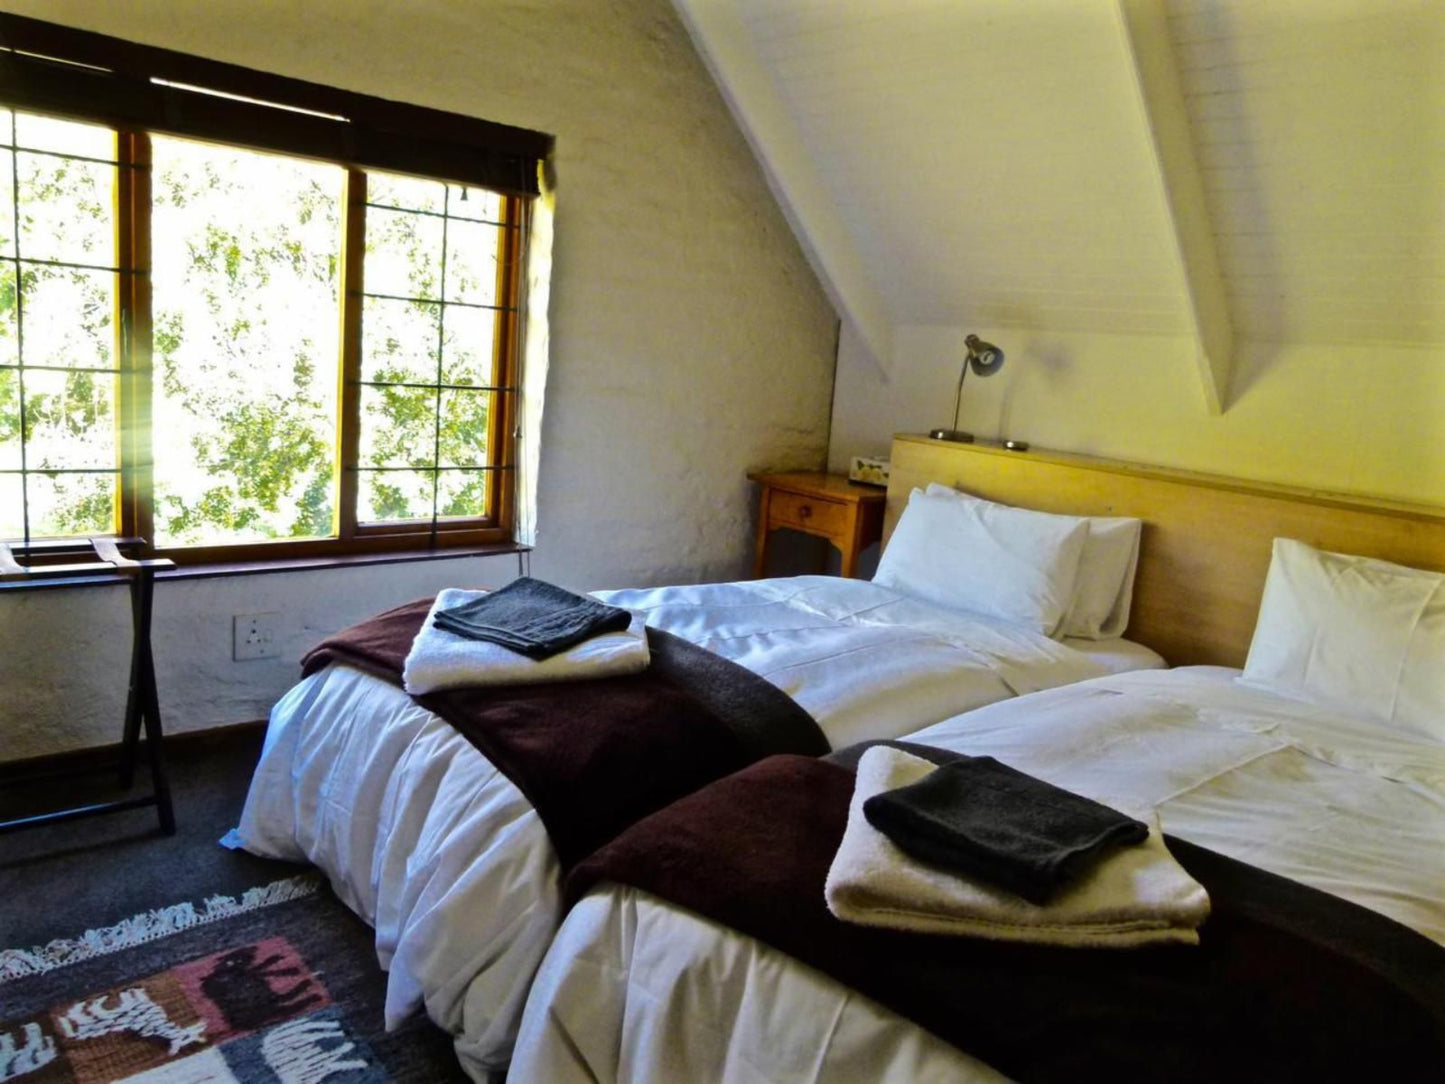 Delagoa Cottage Dullstroom Mpumalanga South Africa Window, Architecture, Bedroom